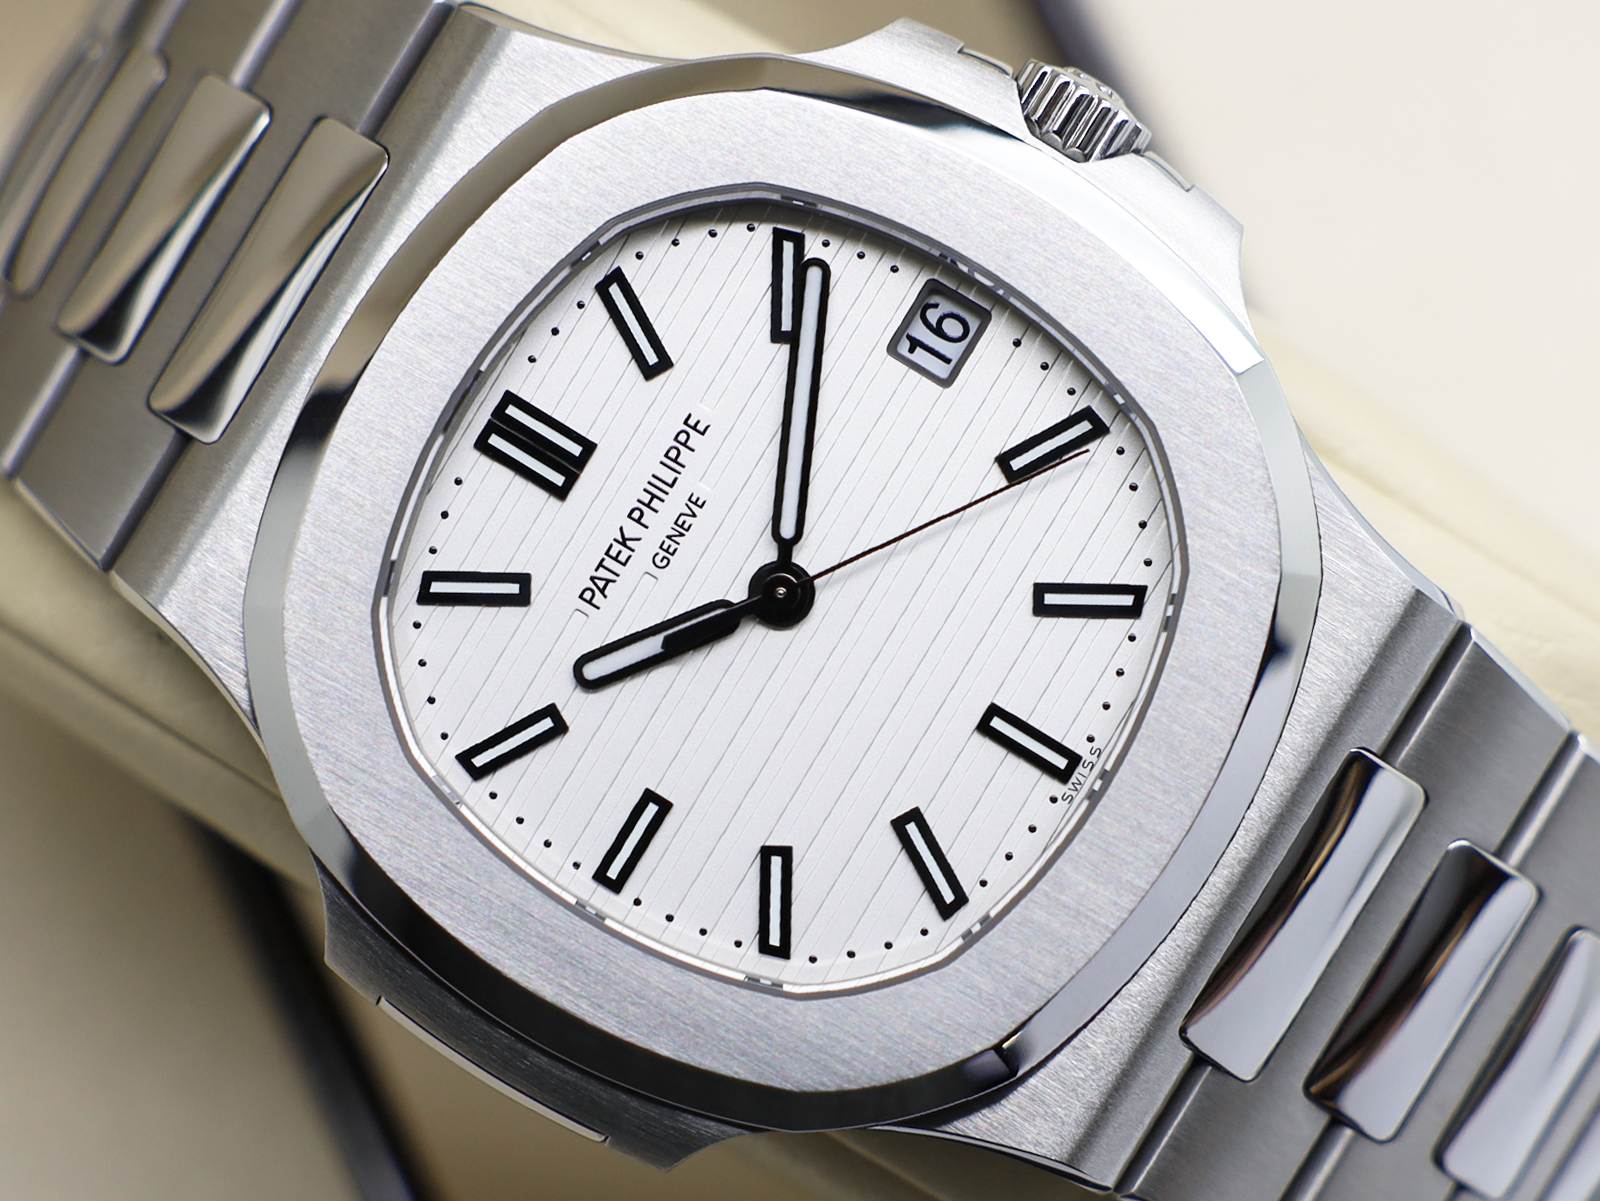 Patek Philippe Nautilus 40mm - Stainless Steel Watches